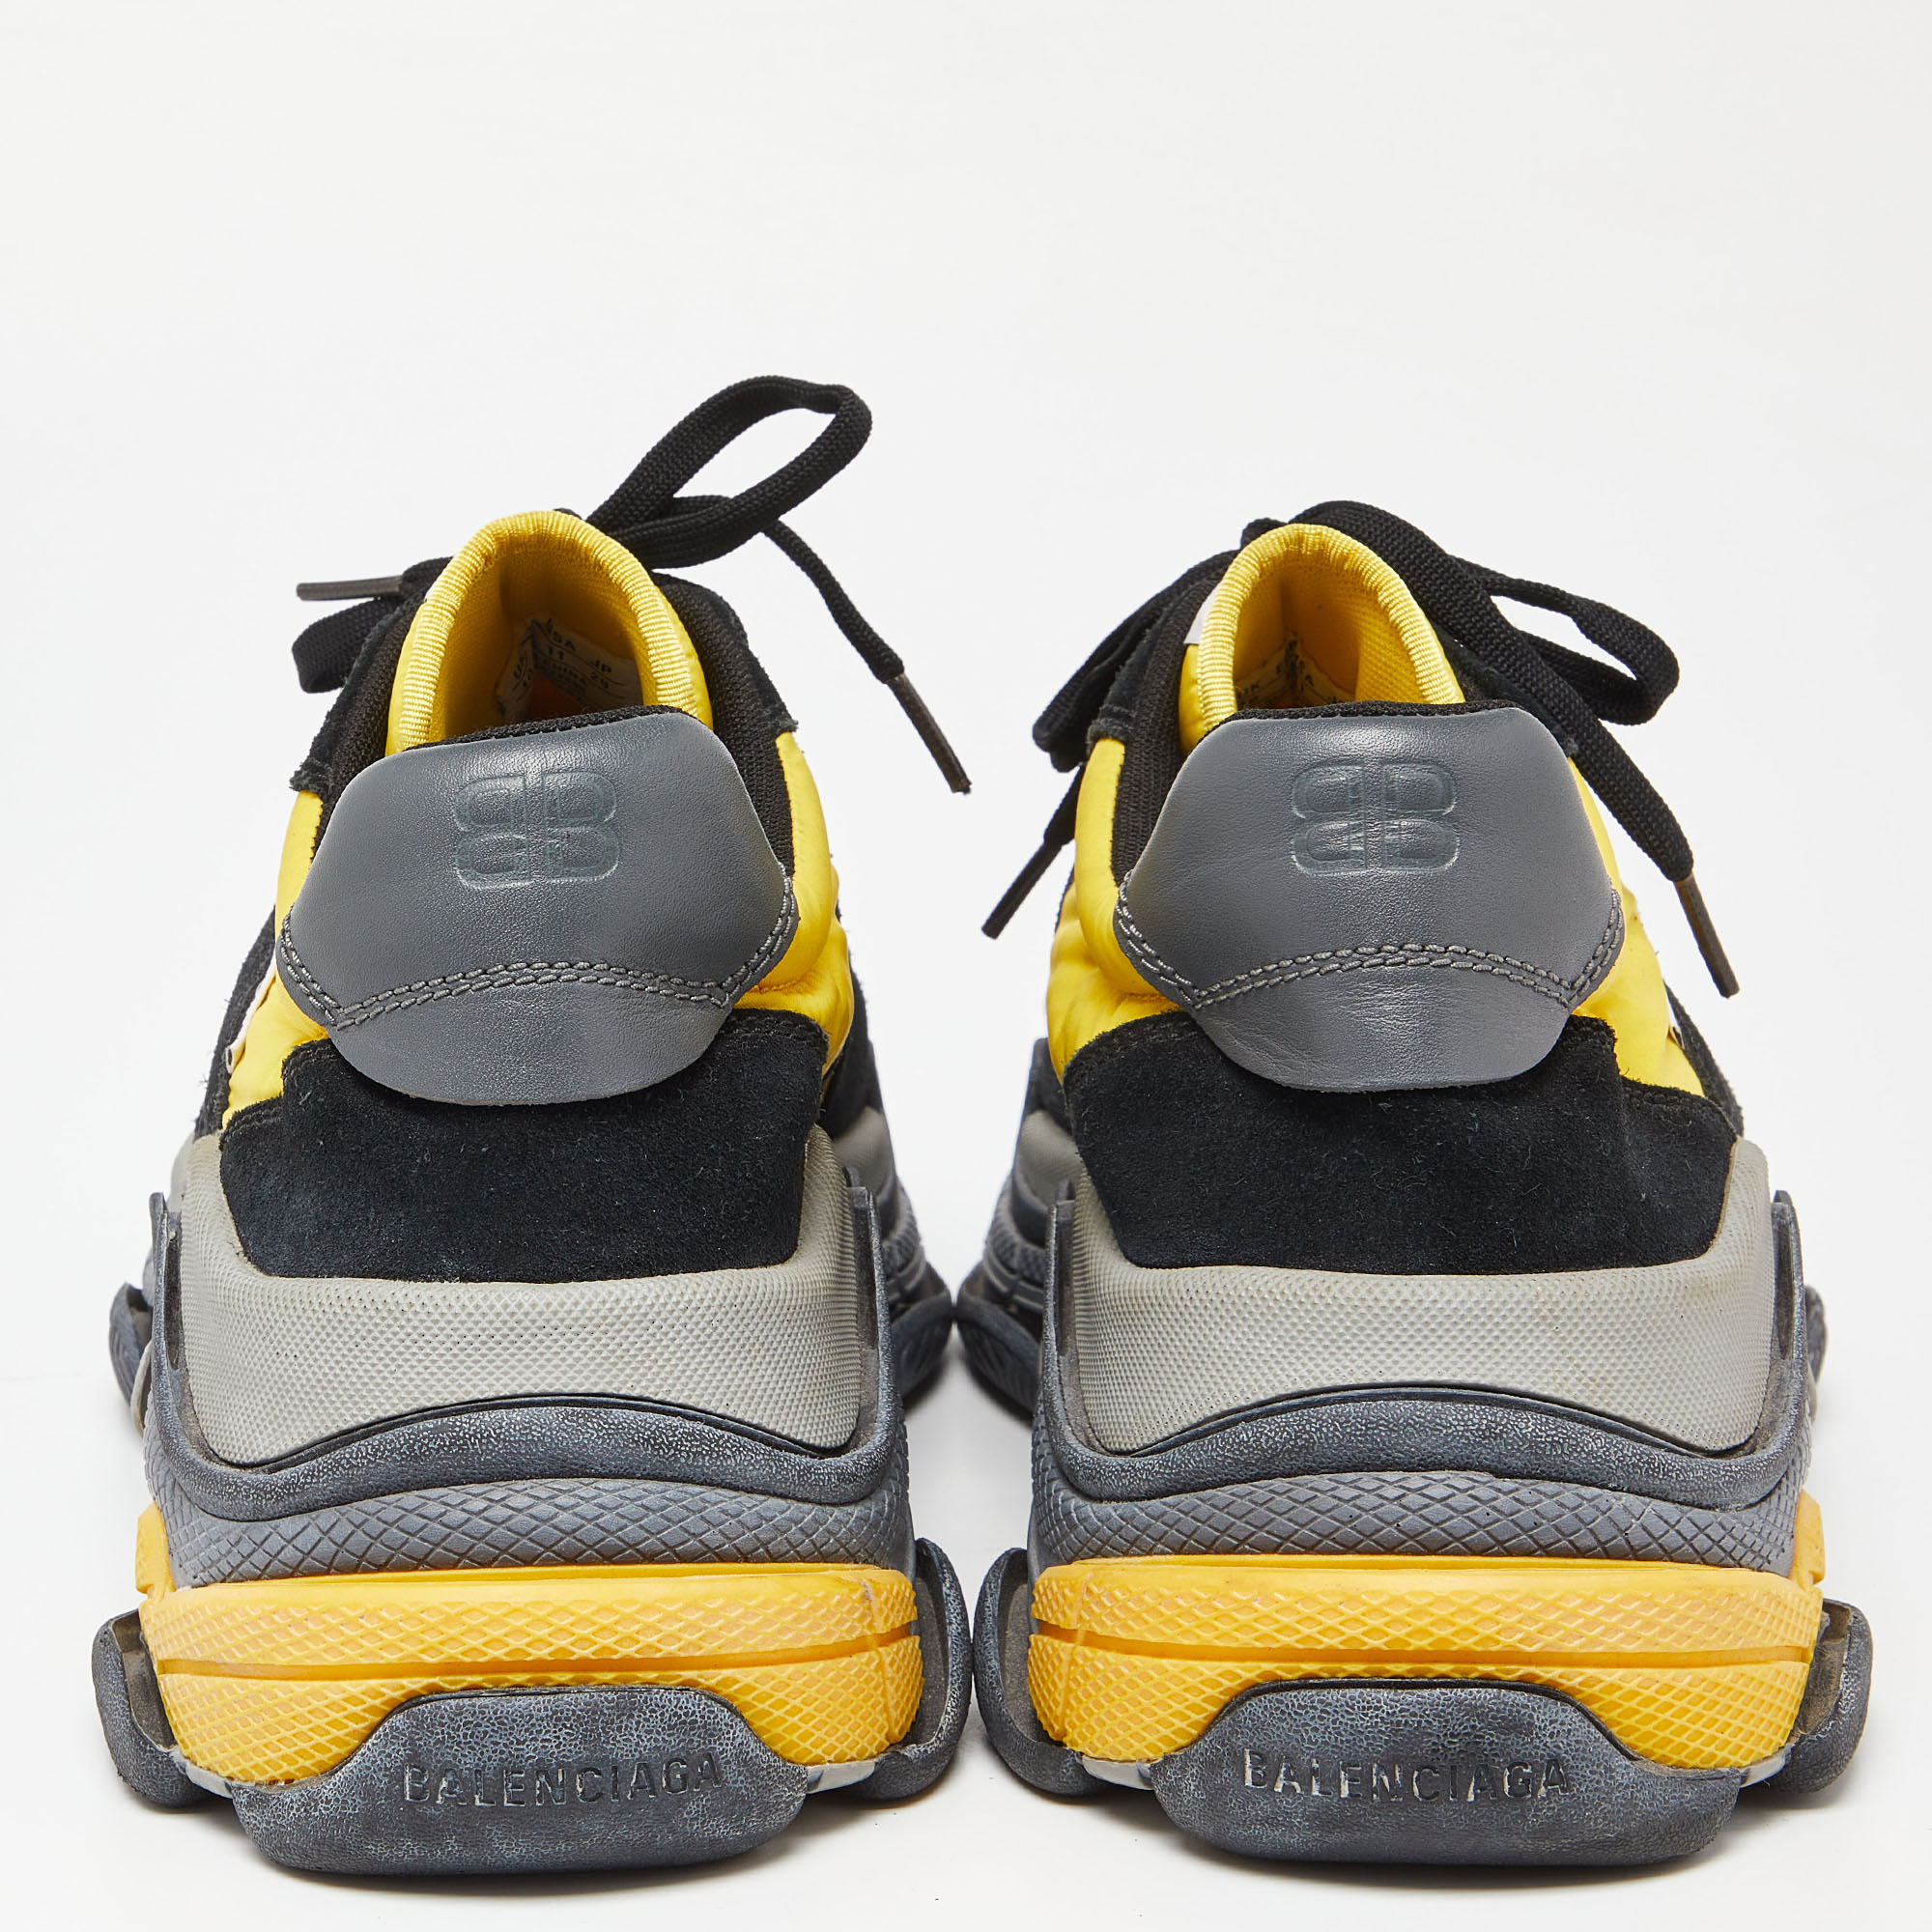 Balenciaga Black/Yellow Suede And Nylon Triple S Sneakers Size 44